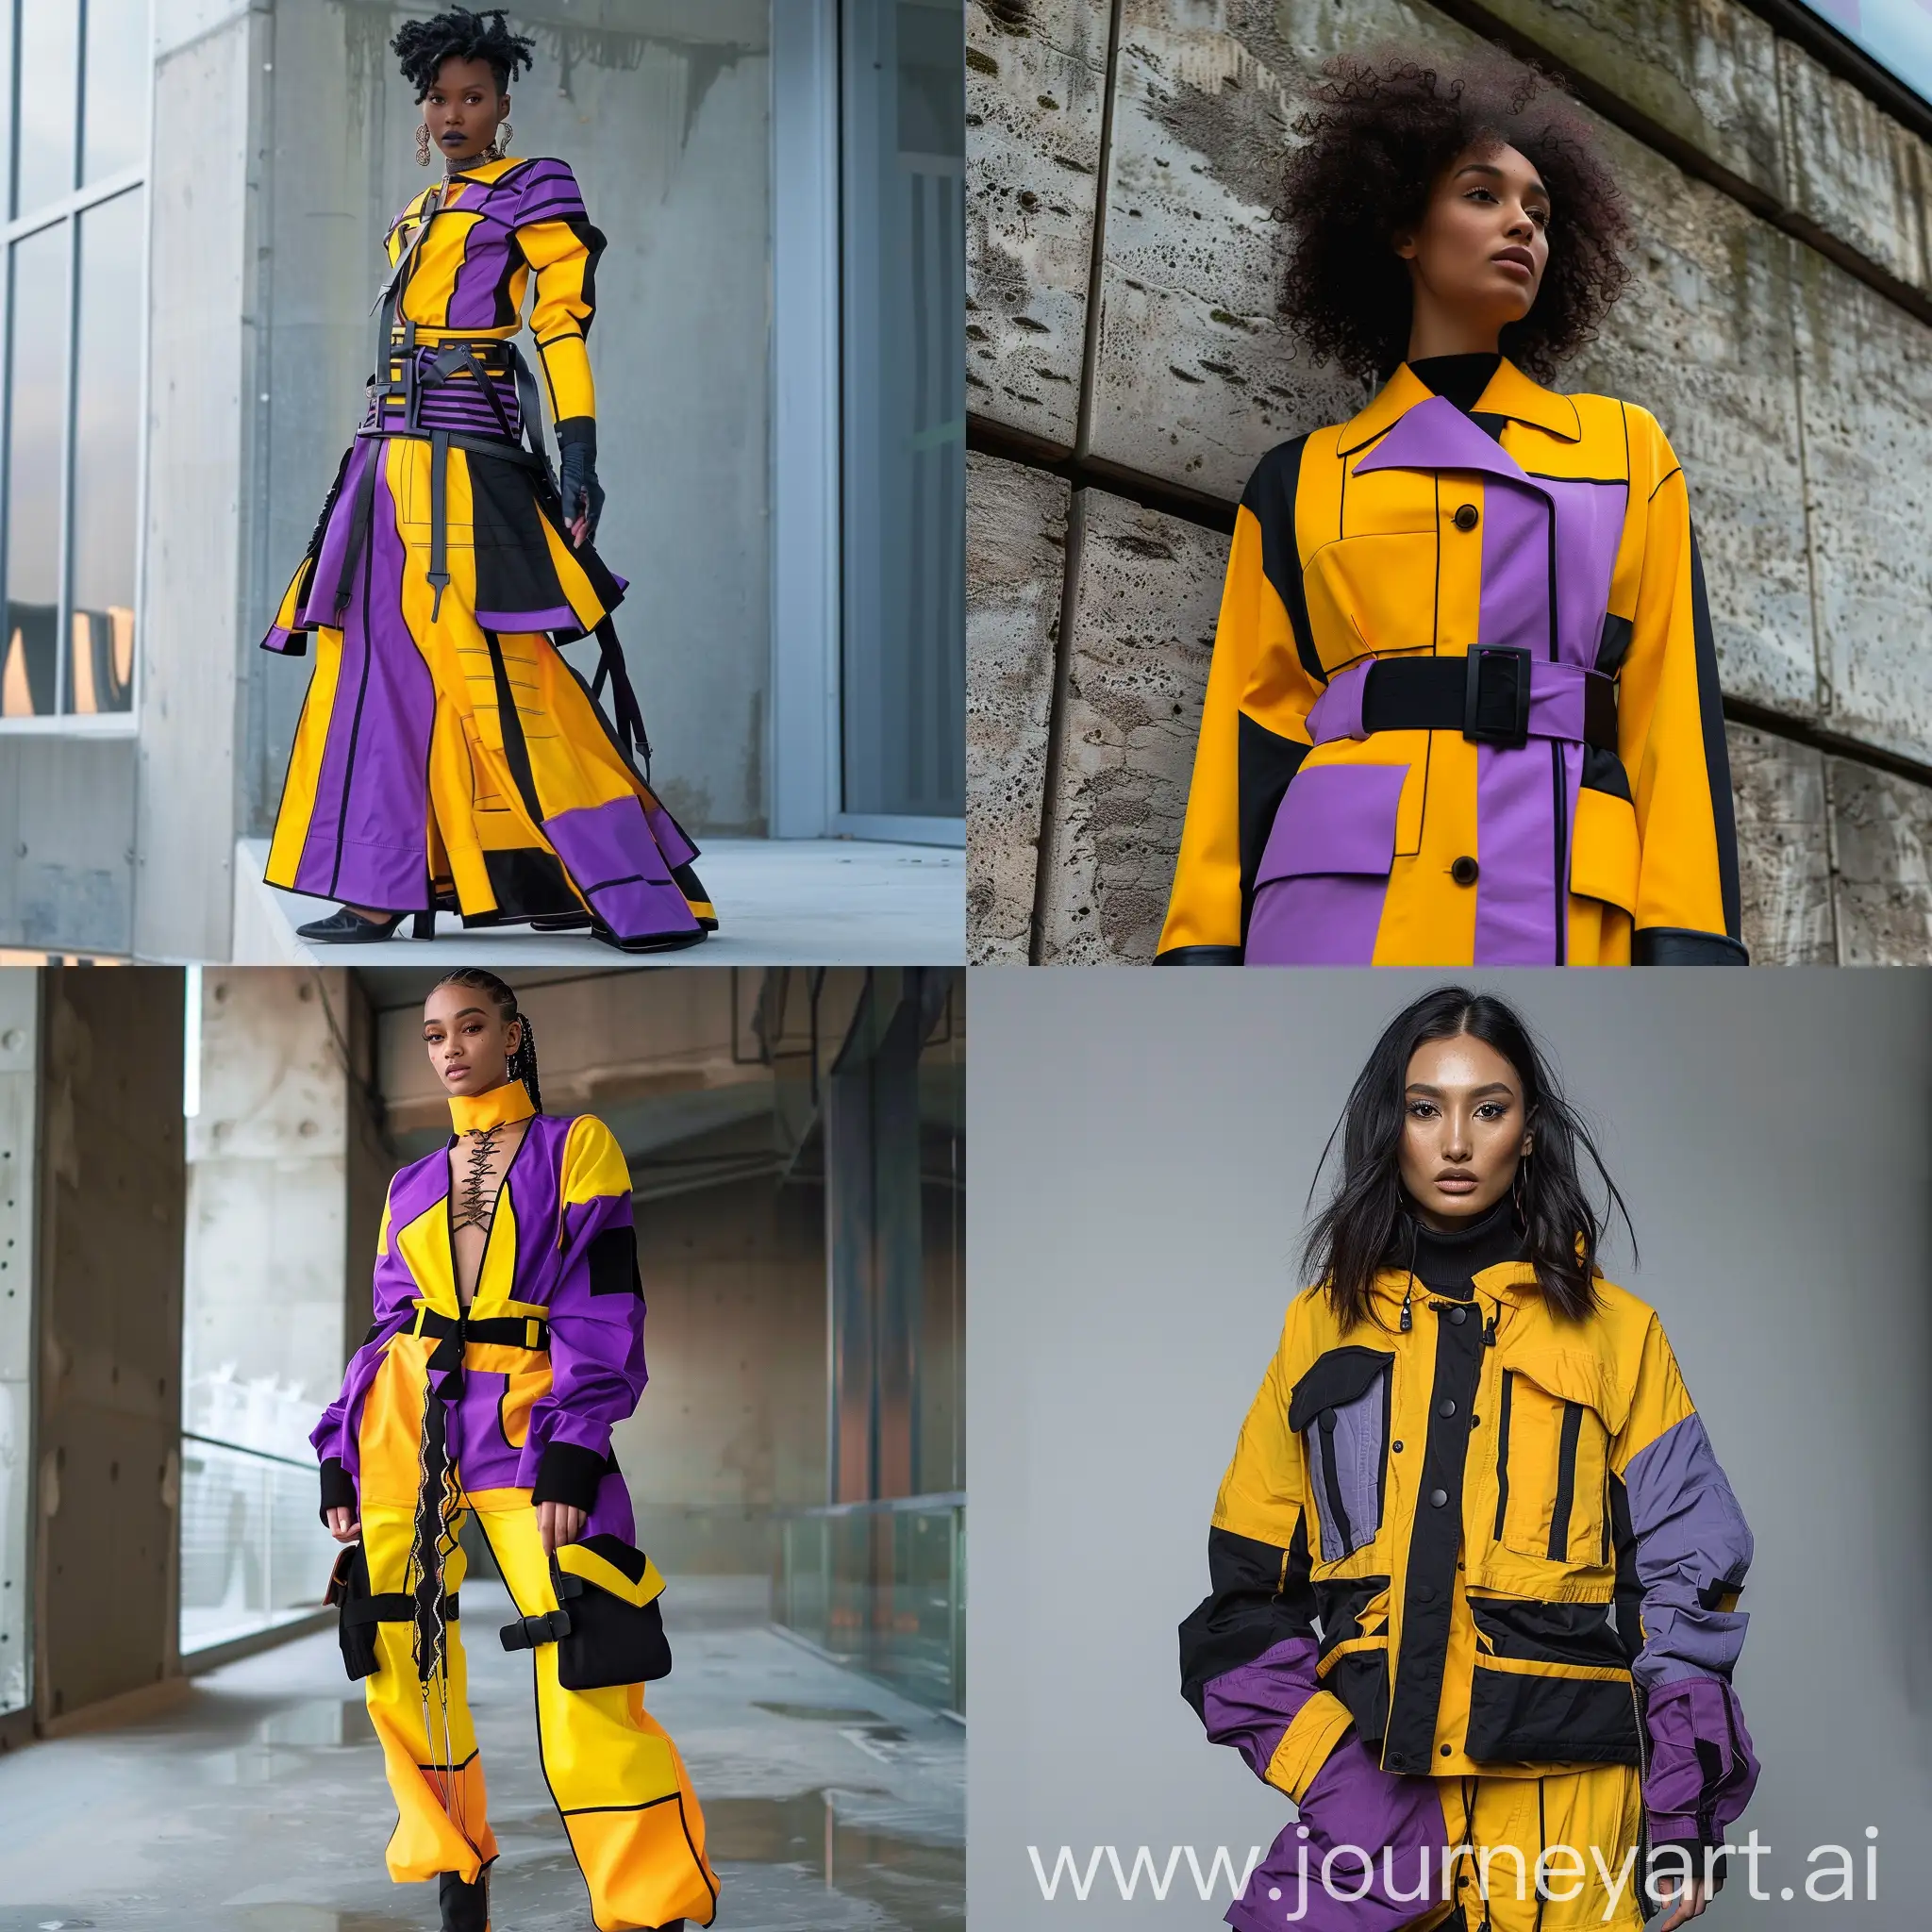 Contemporary-Fashion-Woman-in-Stylish-Yellow-Purple-and-Black-Ensemble